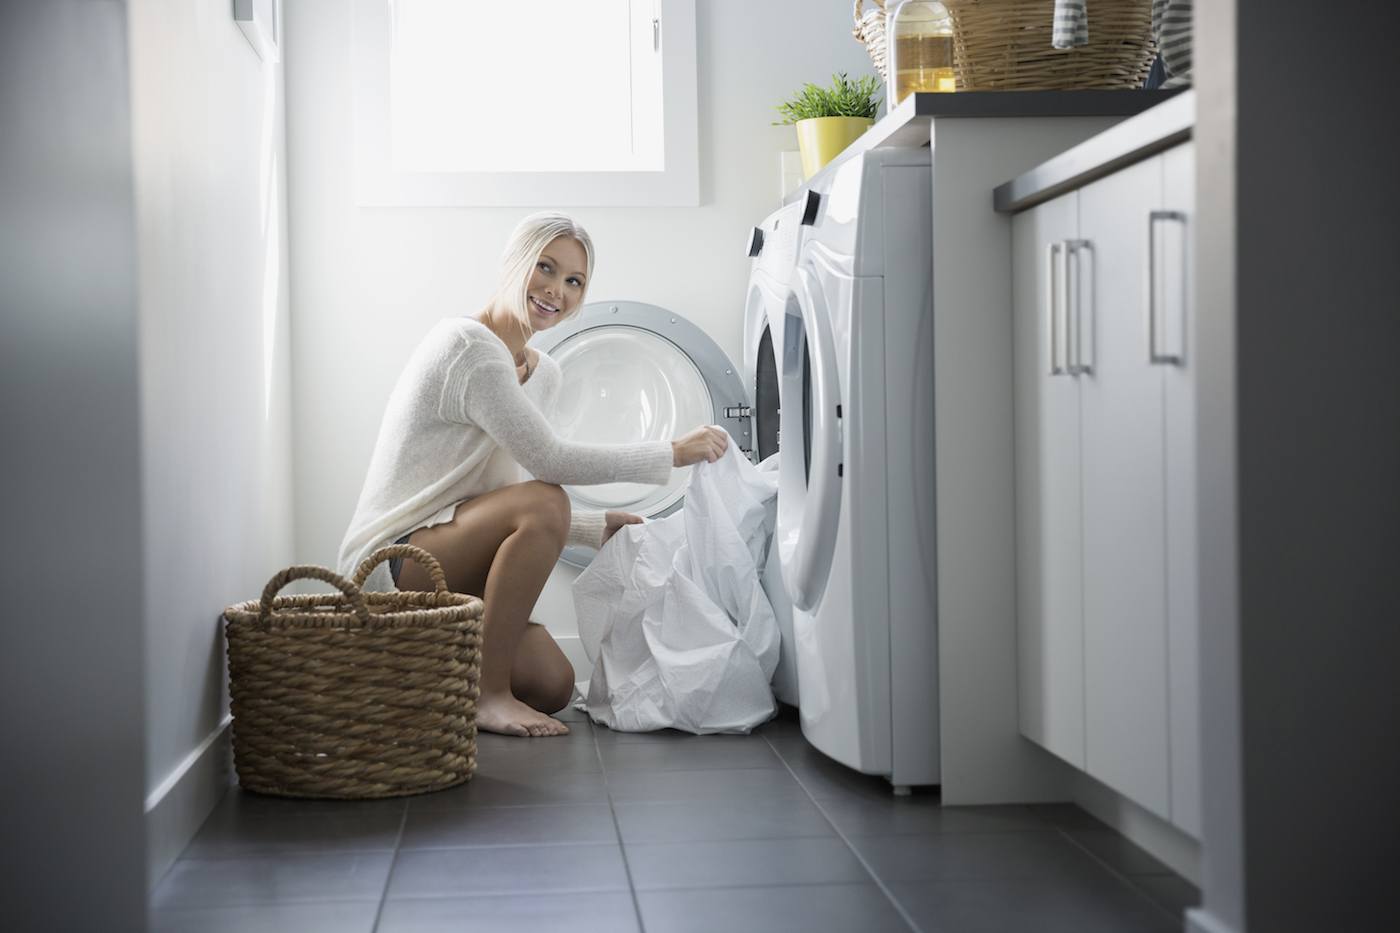 laundry detergent for sensitive skin